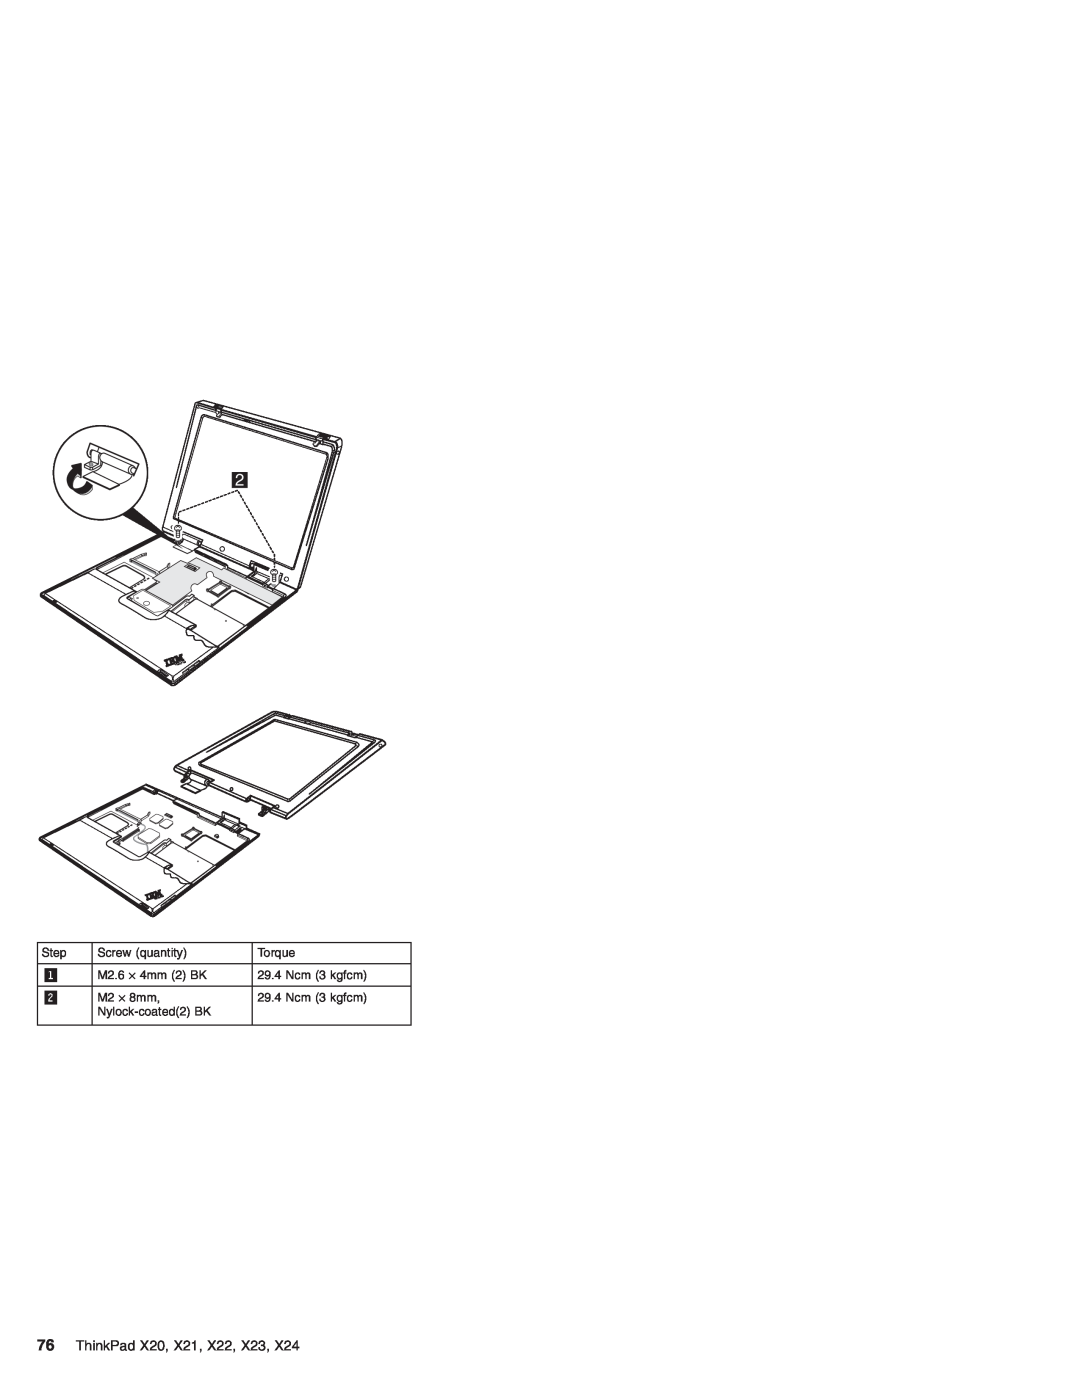 IBM X24 manual ThinkPad X20, X21, X22, X23 